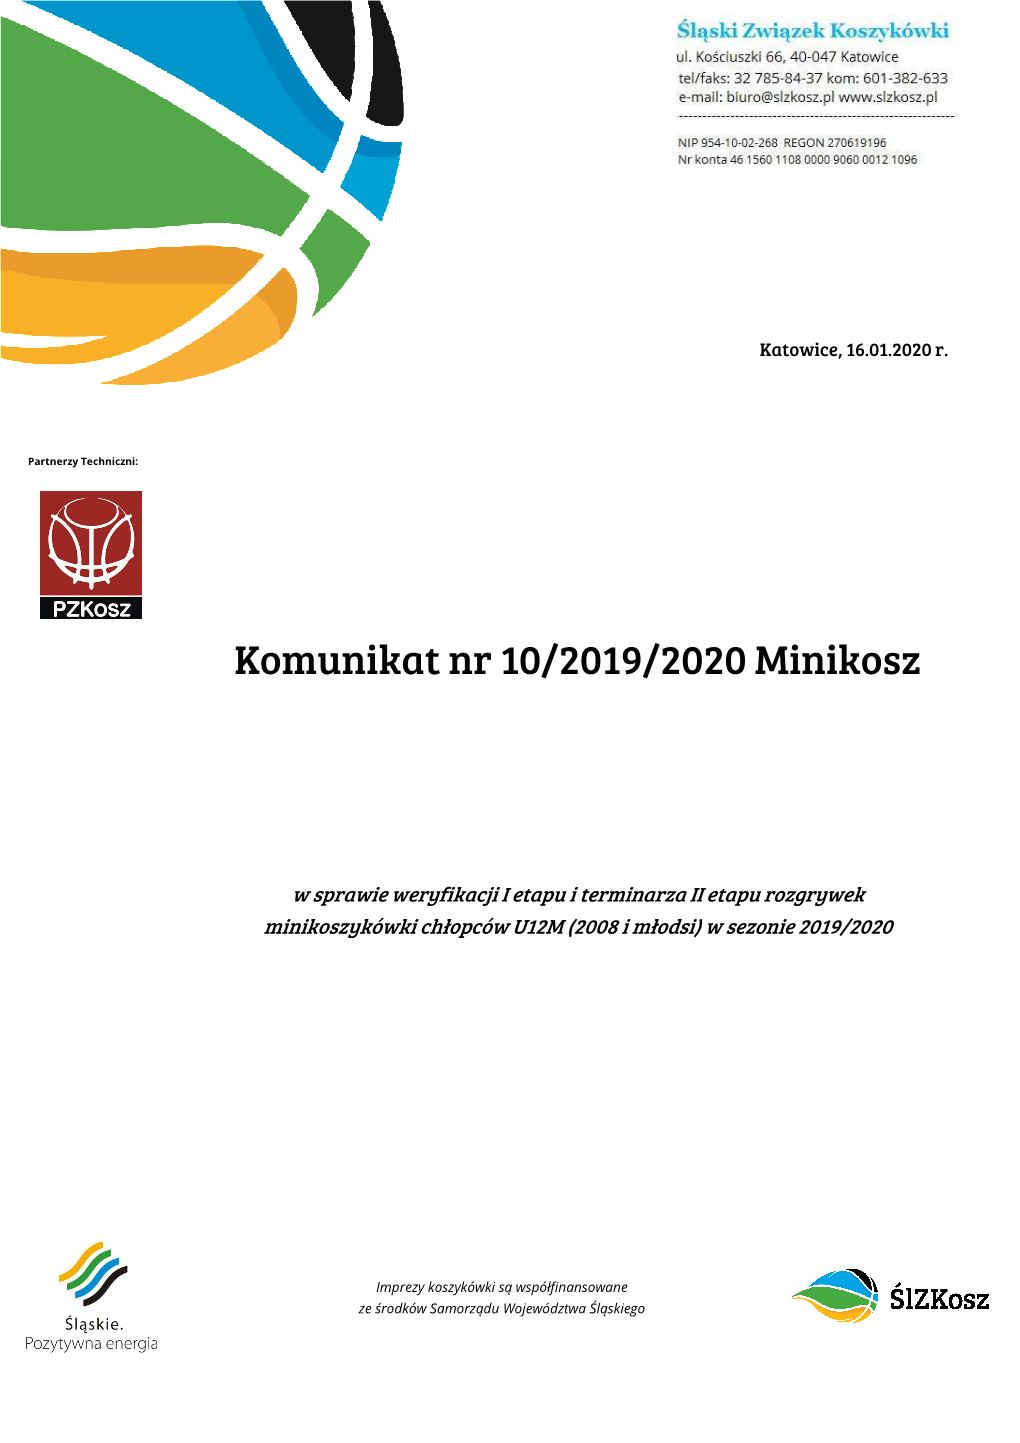 Komunikat Minikoszykówki Nr 10/2019/2020